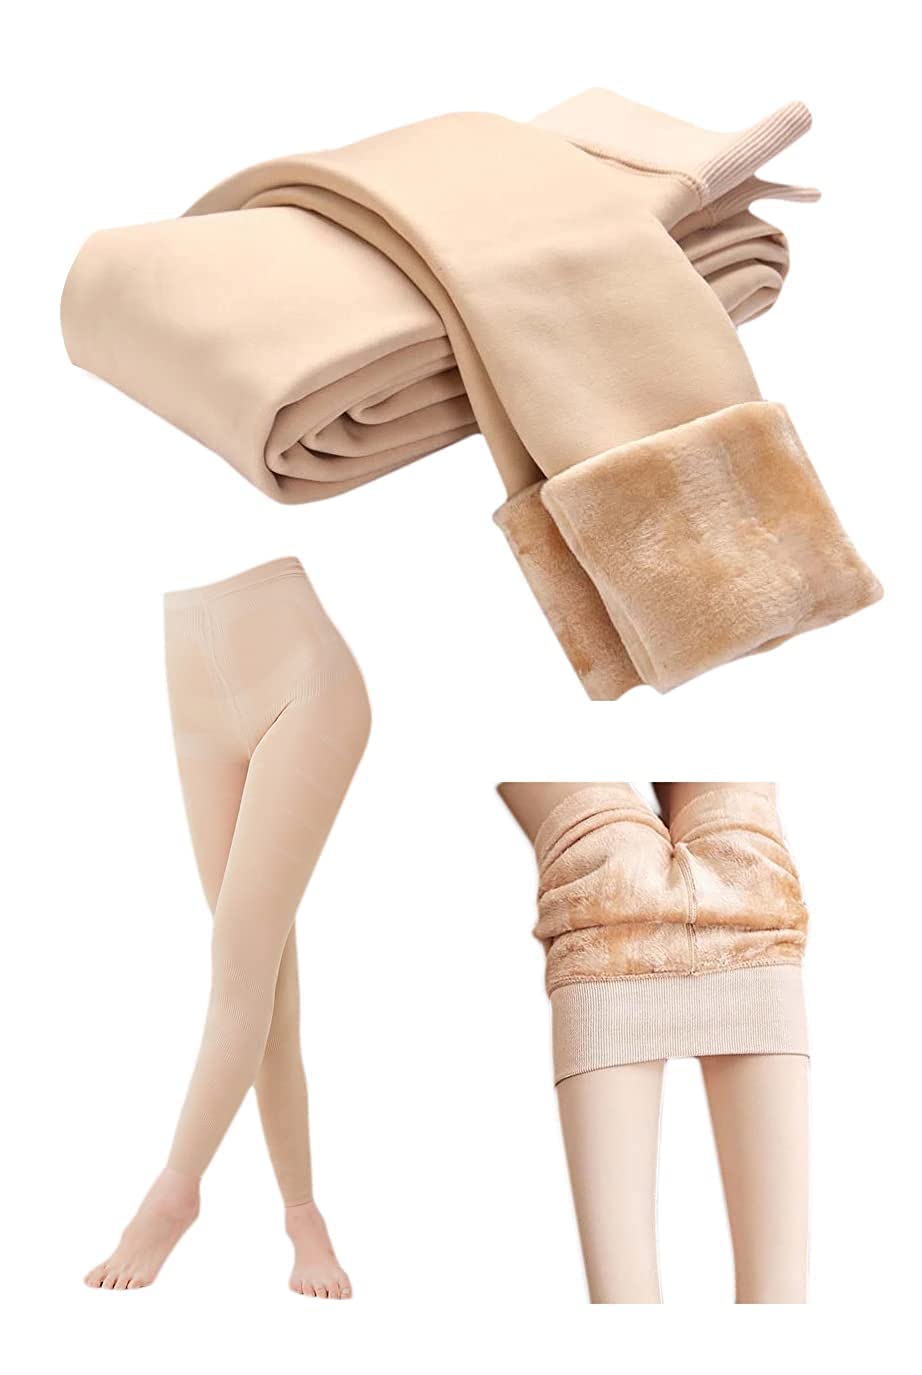 Buy Dollar Missy Women's Skinny Leggings (511_Coral_42 Free at Amazon.in